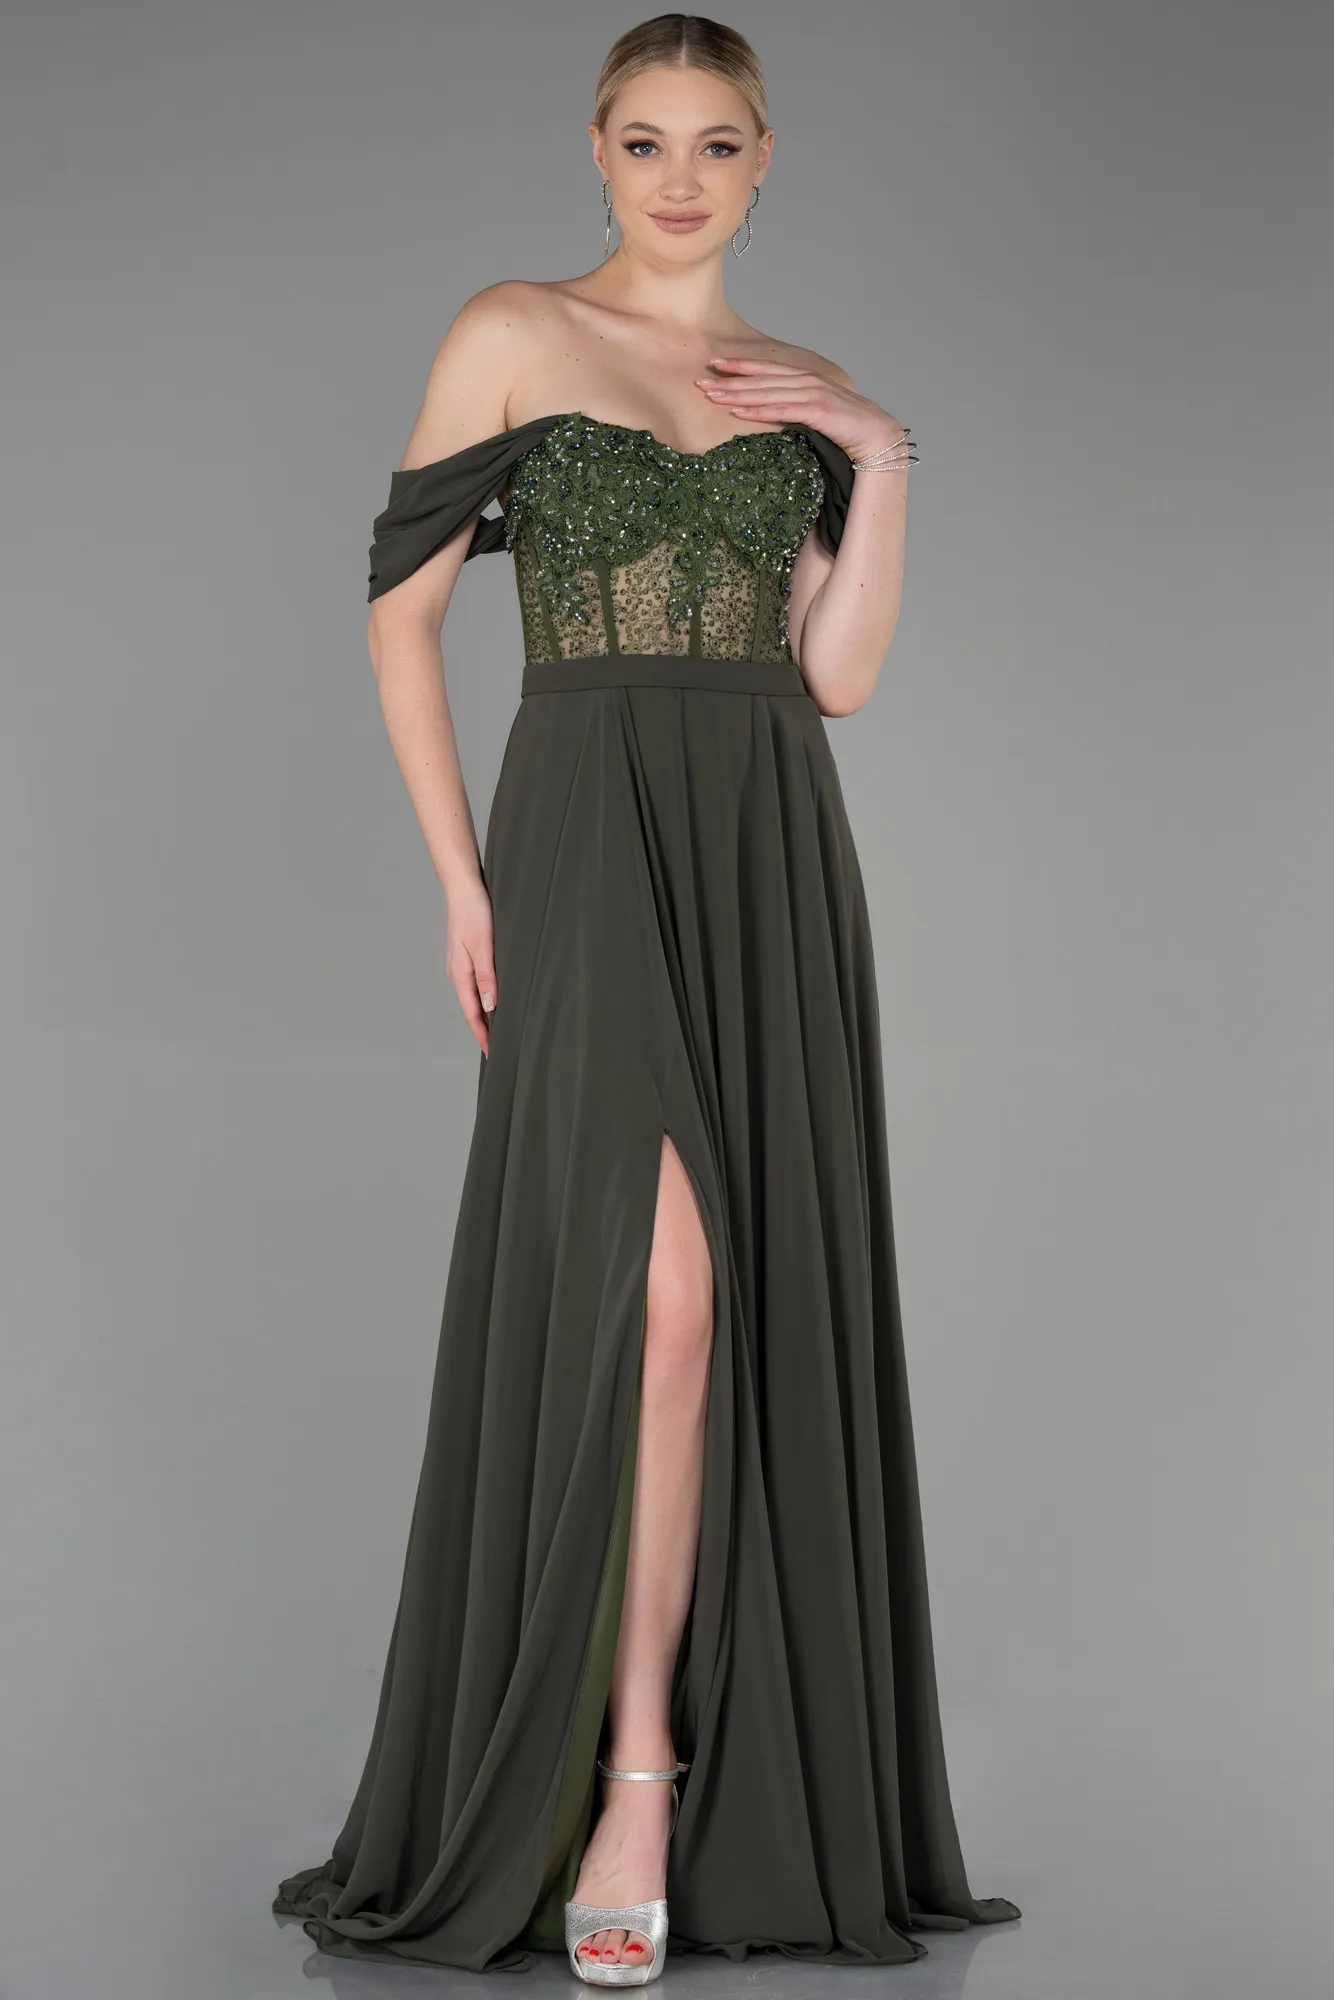 Olive Drab-Long Chiffon Evening Dress ABU3310